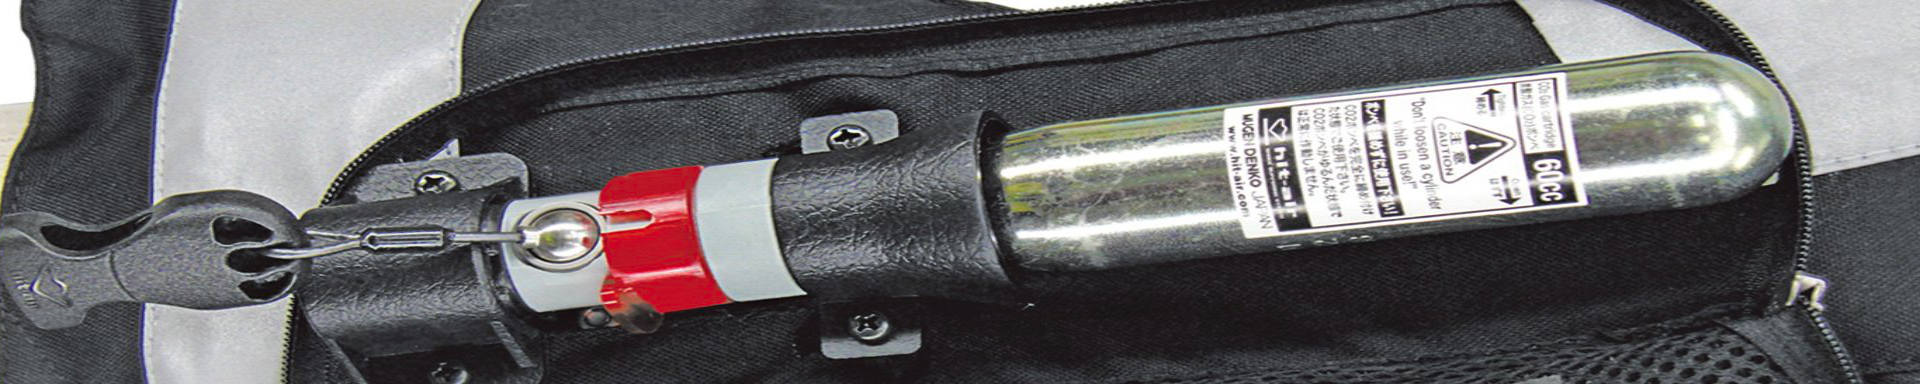 Airbag Accessories | MunroPowersports.com | Munro Industries mp-100803030101